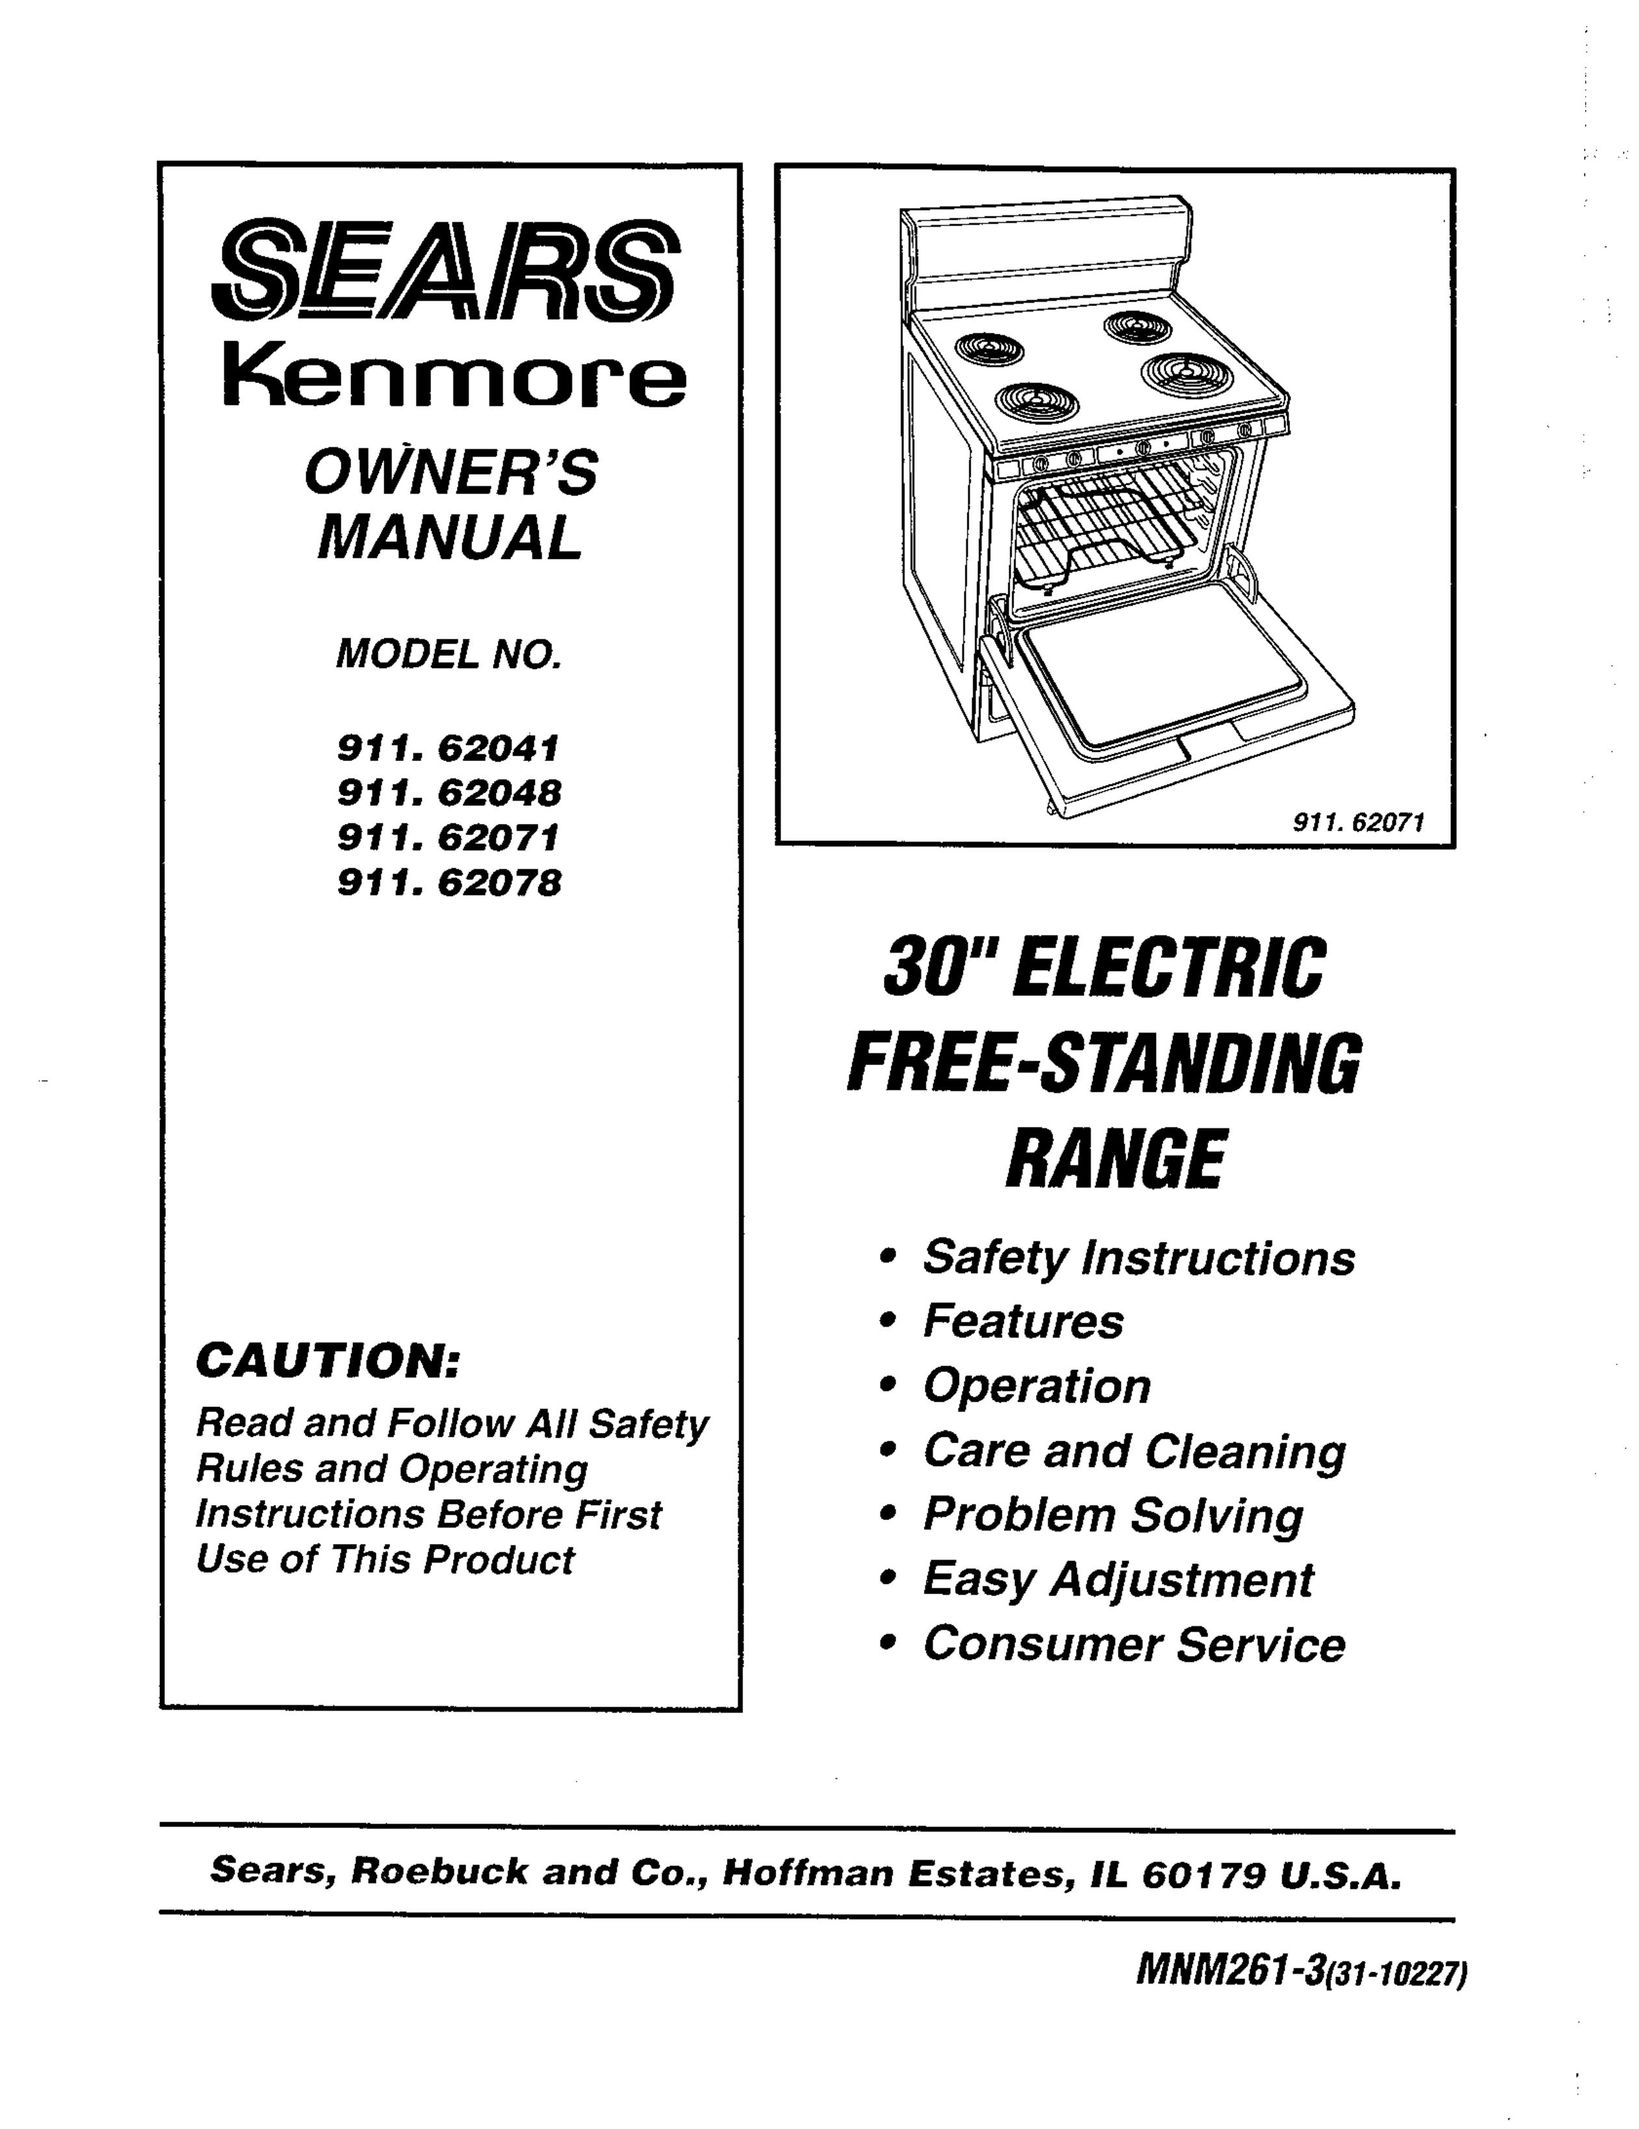 Sears 911. 62078 Oven User Manual